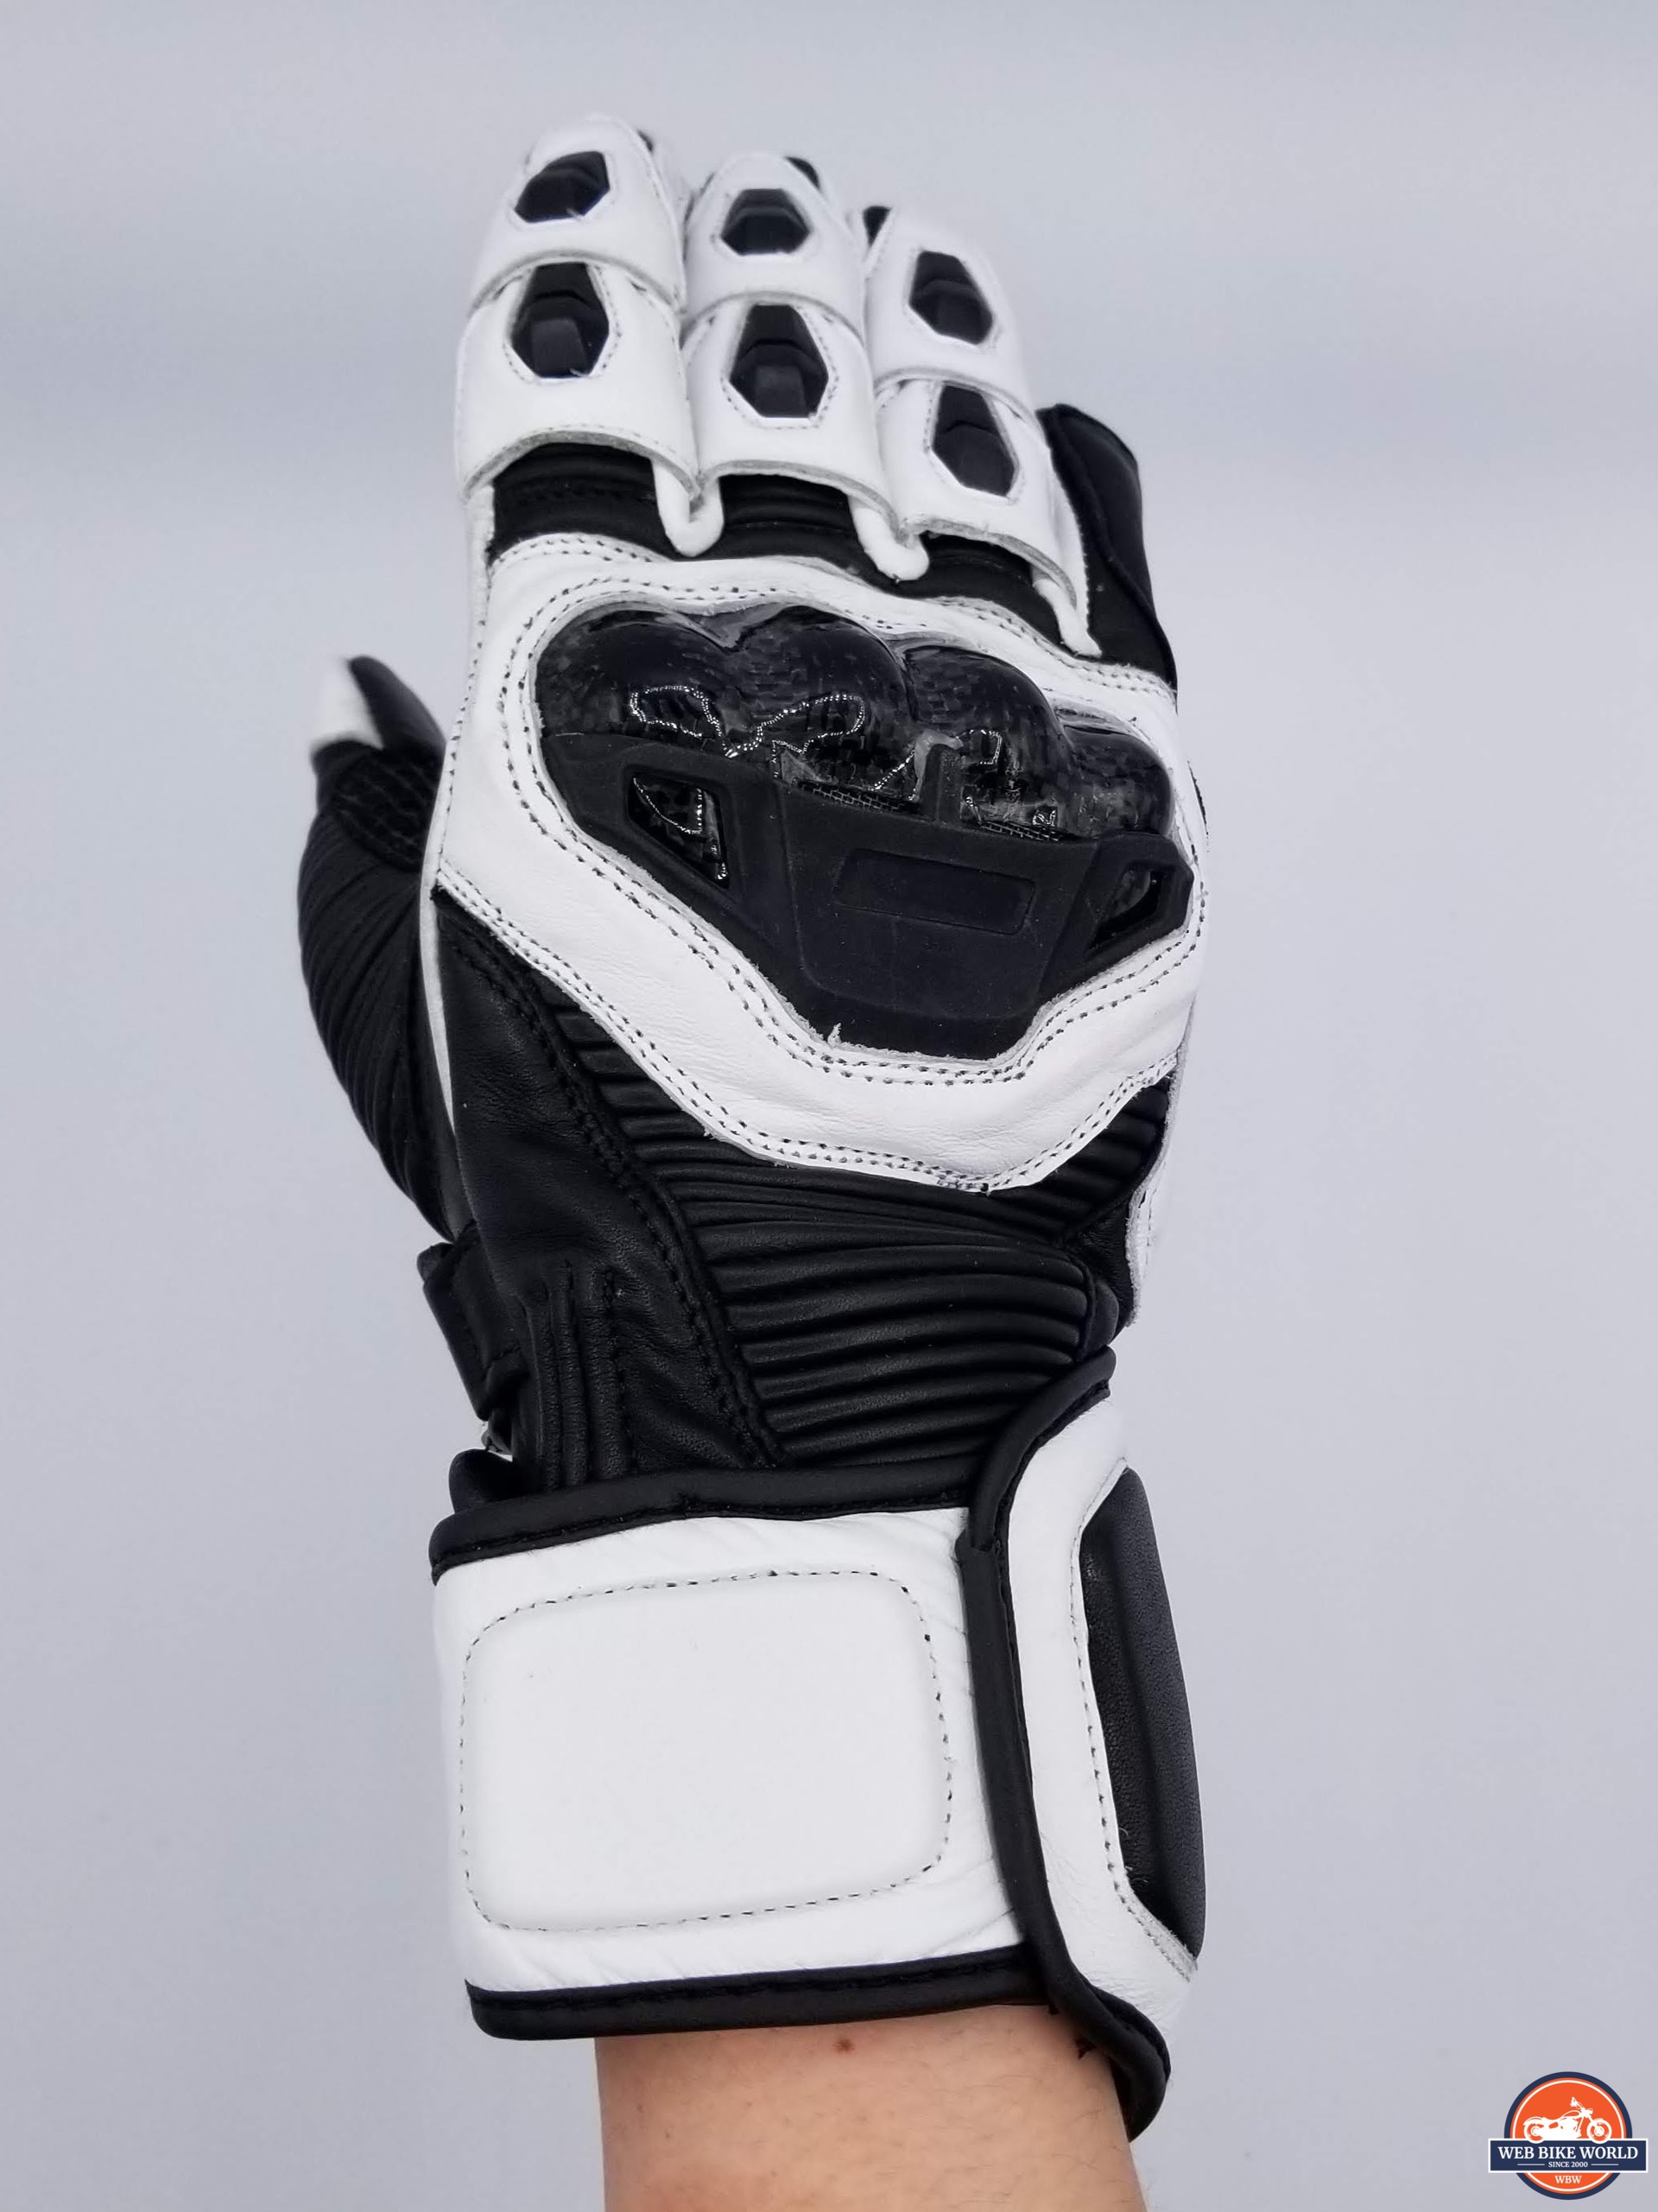 Spada Predator 2 Motorcycle Motorbike Leather Long Sports Racing Glove 